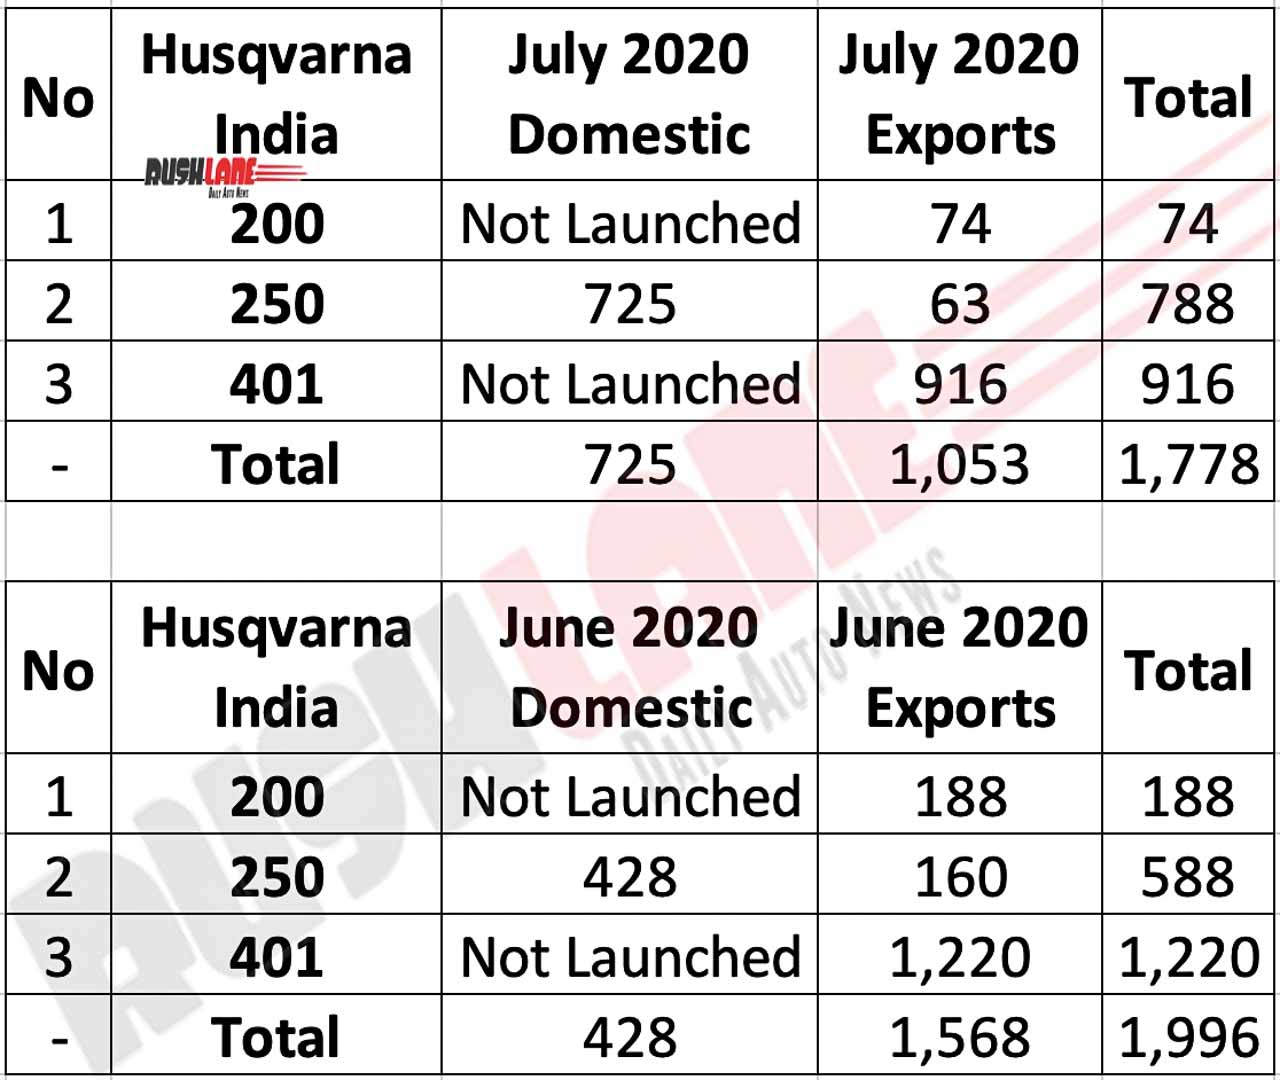 https://www.rushlane.com/wp-content/uploads/2020/08/husqvarna-sales-july-2020-exports.jpg